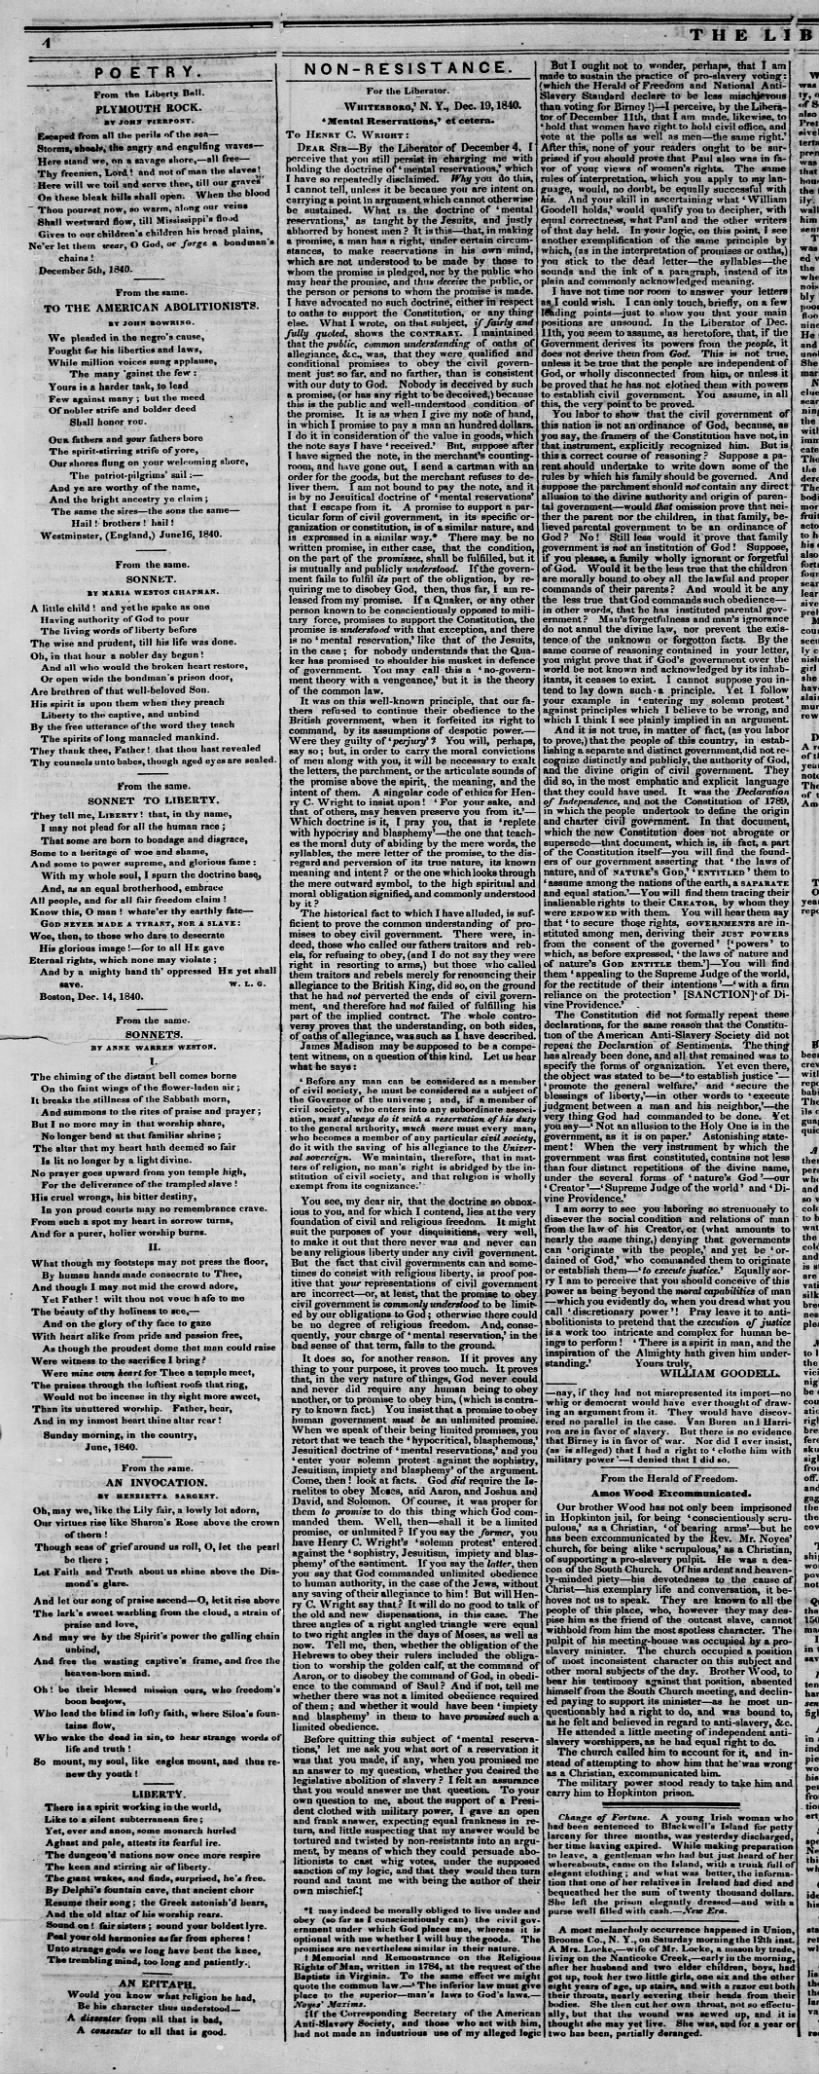 01 JAN 1841 FRI, THE LIBERATOR, PAGE 4, SECTION 1